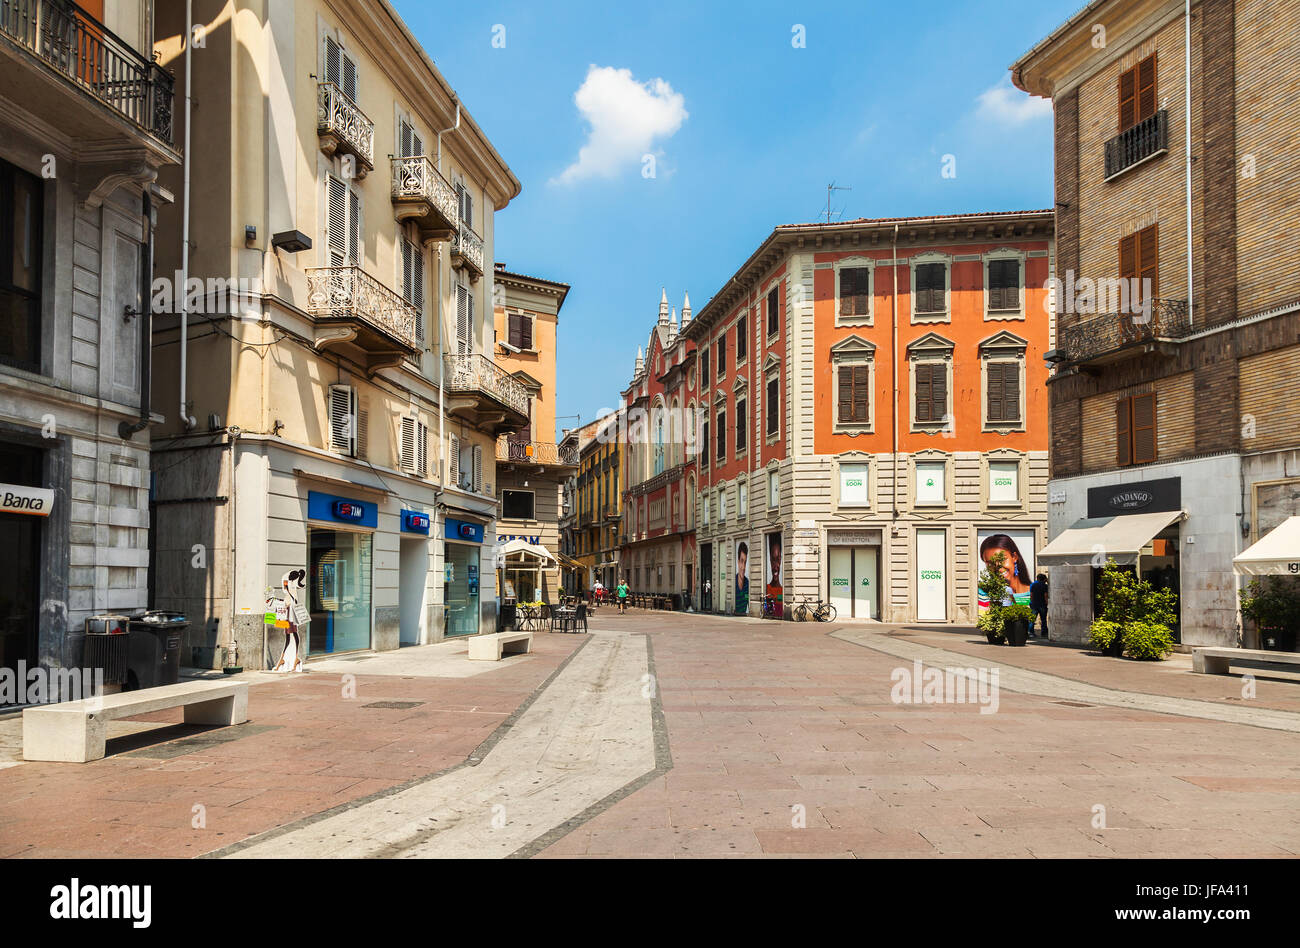 The historic centre of Allesanria, Italy. Stock Photo